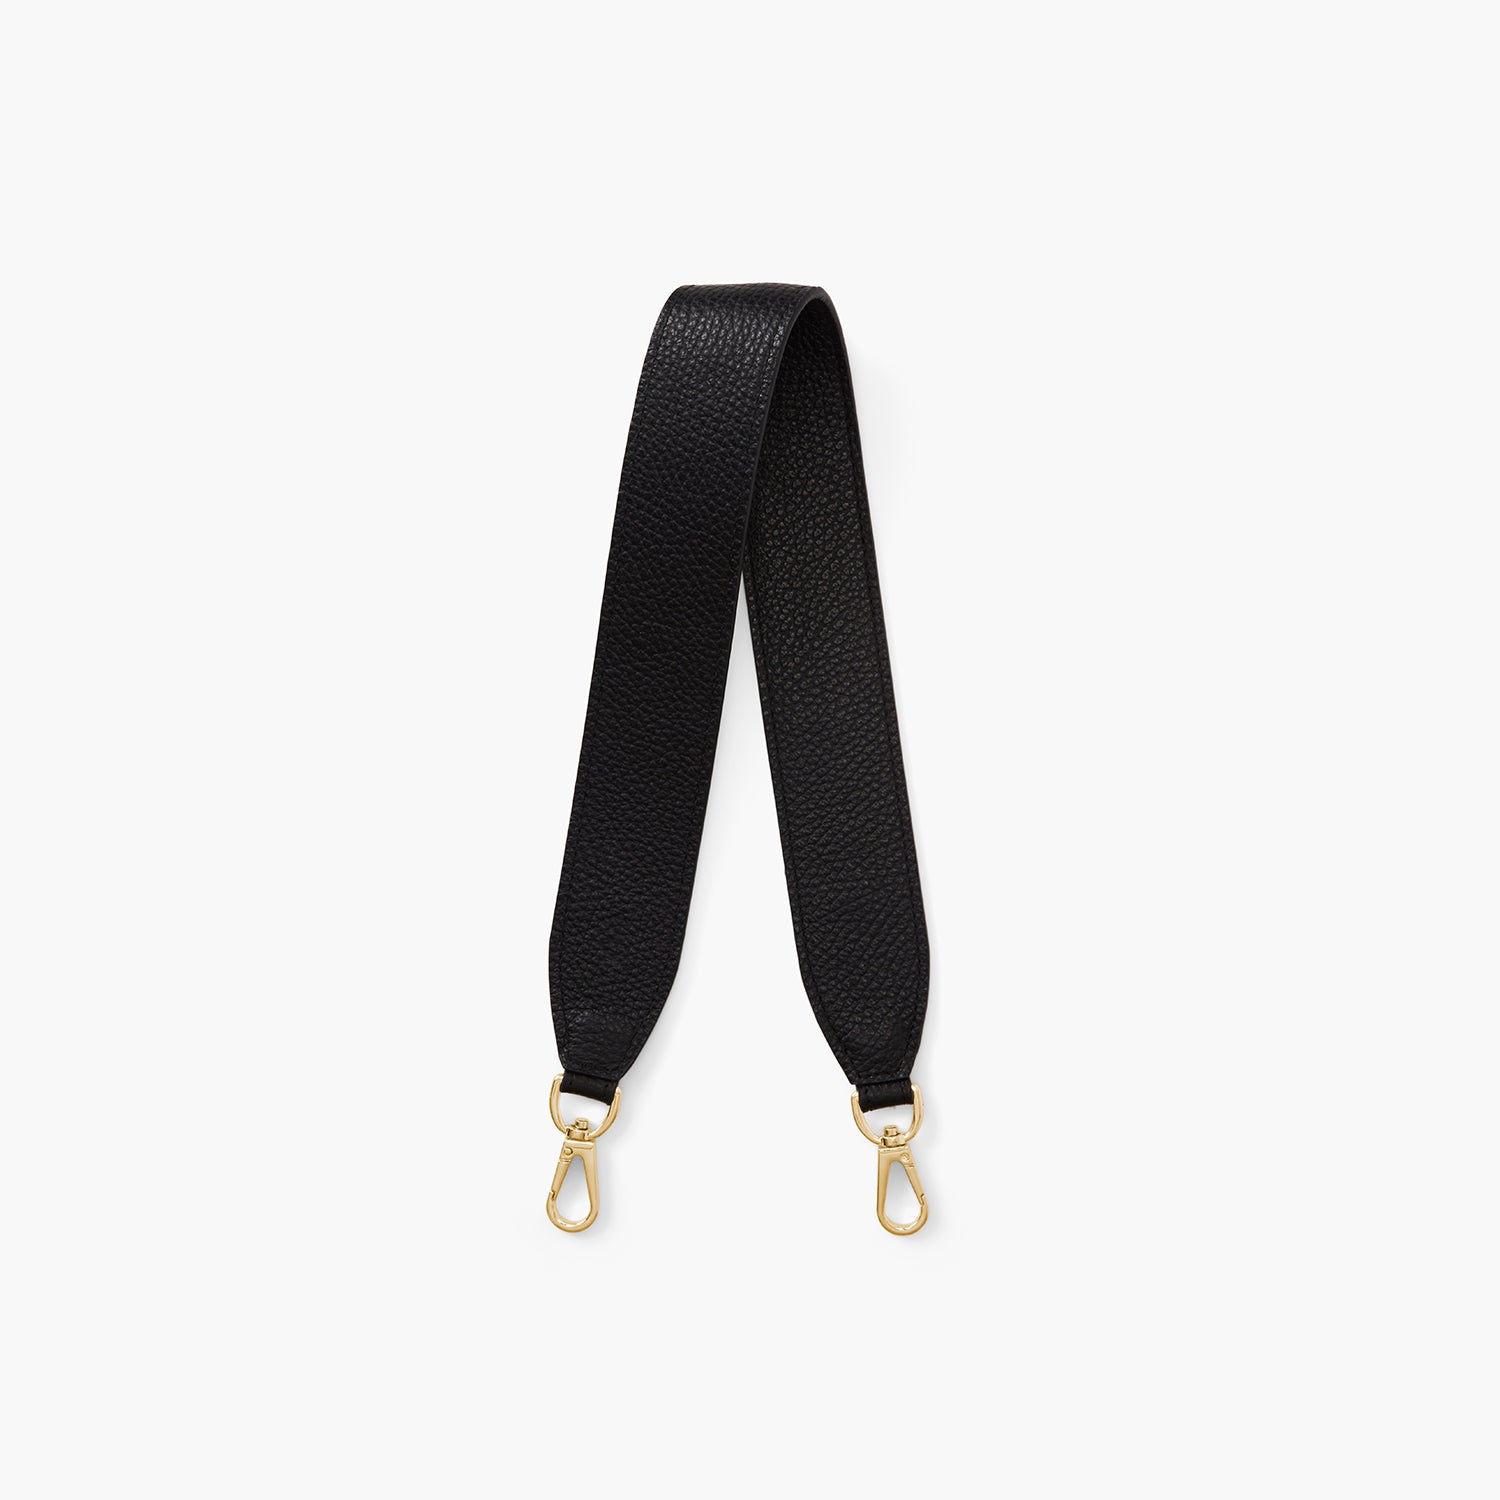 Middle strap - Black/Gold